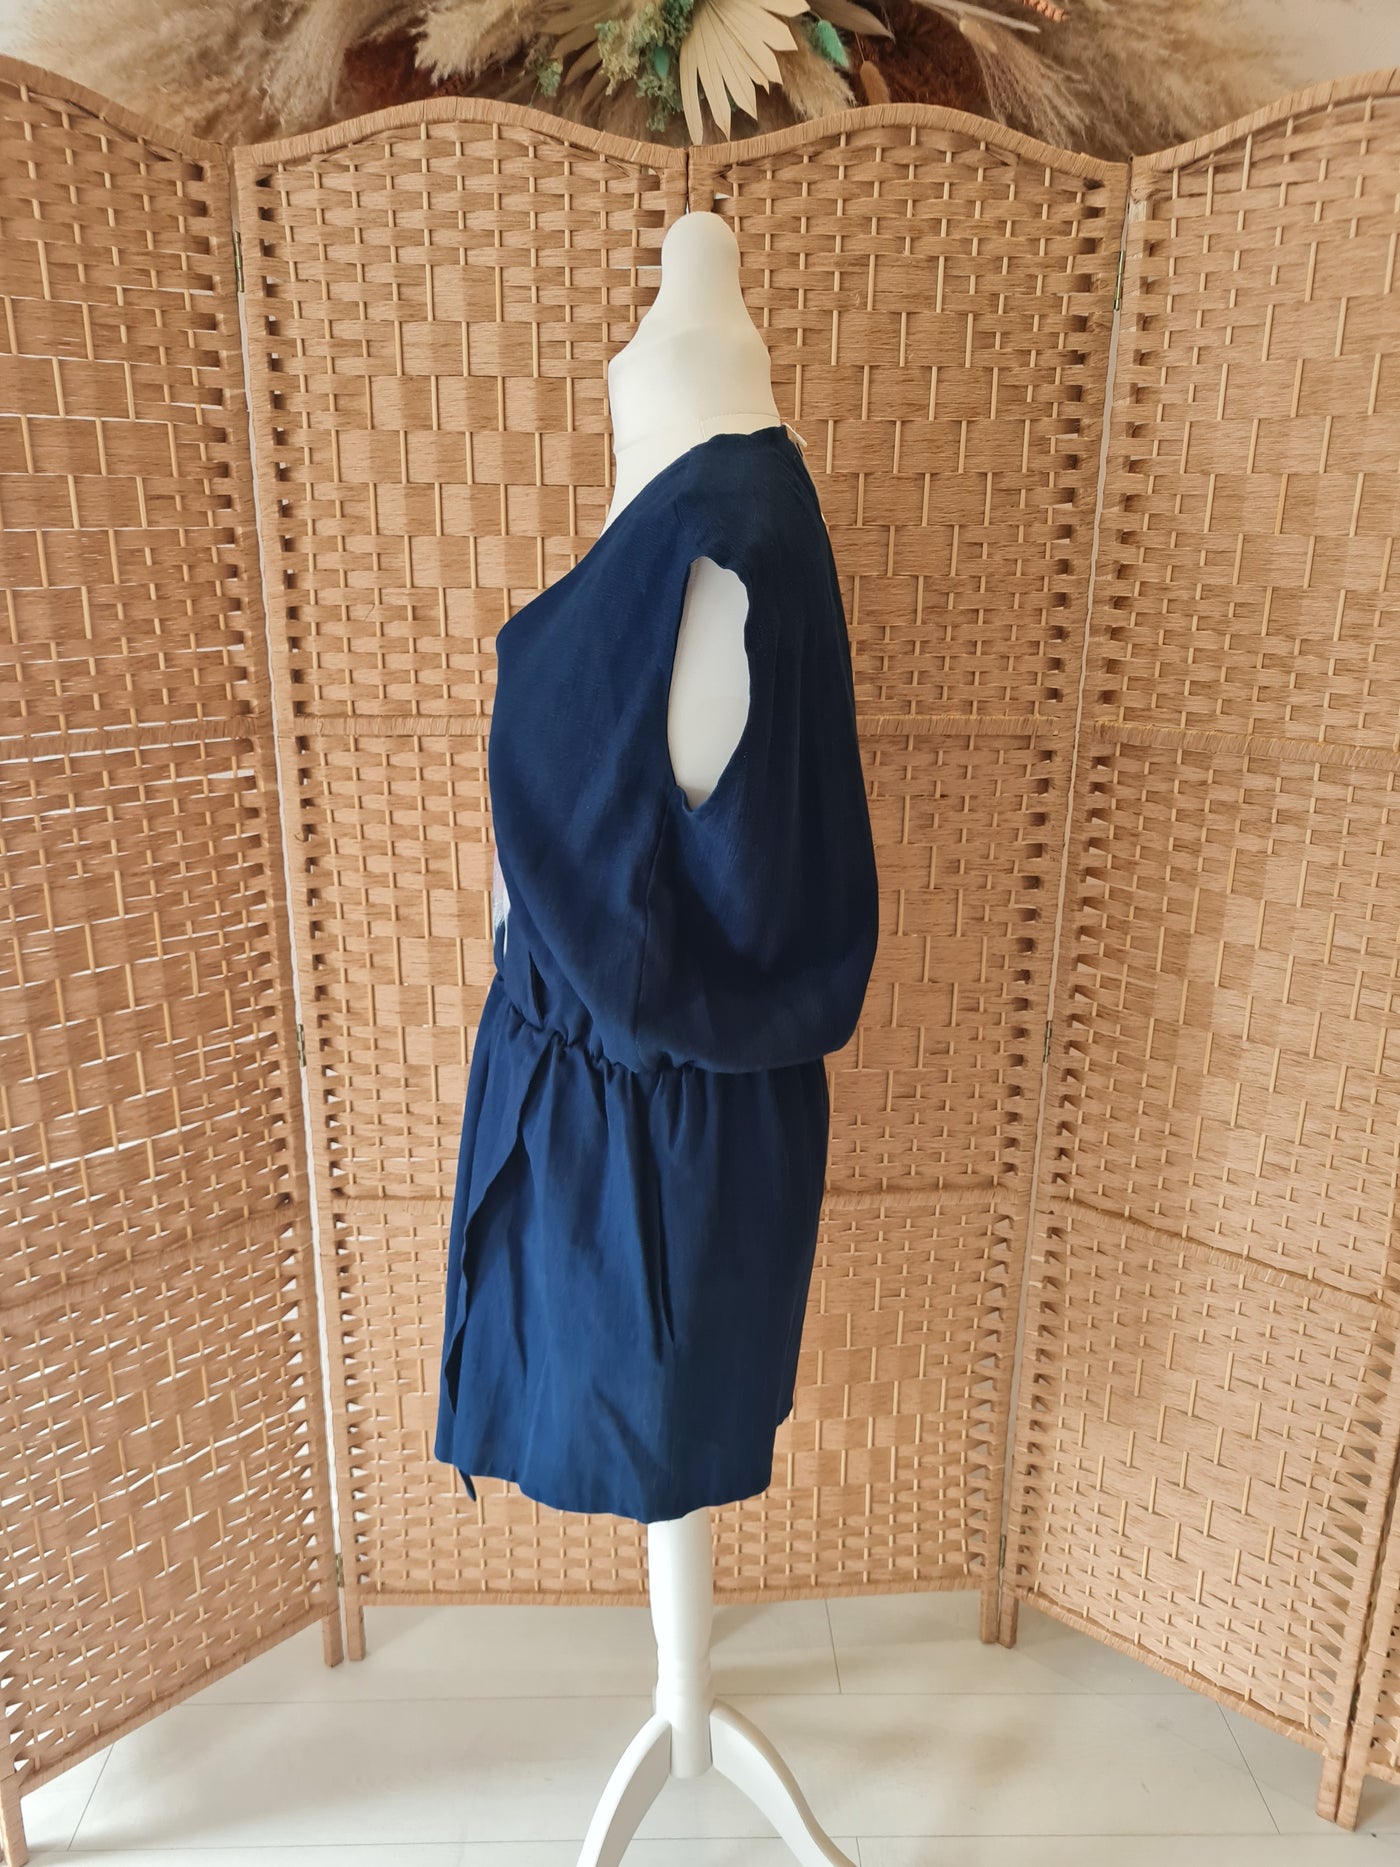 Ana Segurado Navy & Blush Linen Dress Size 10